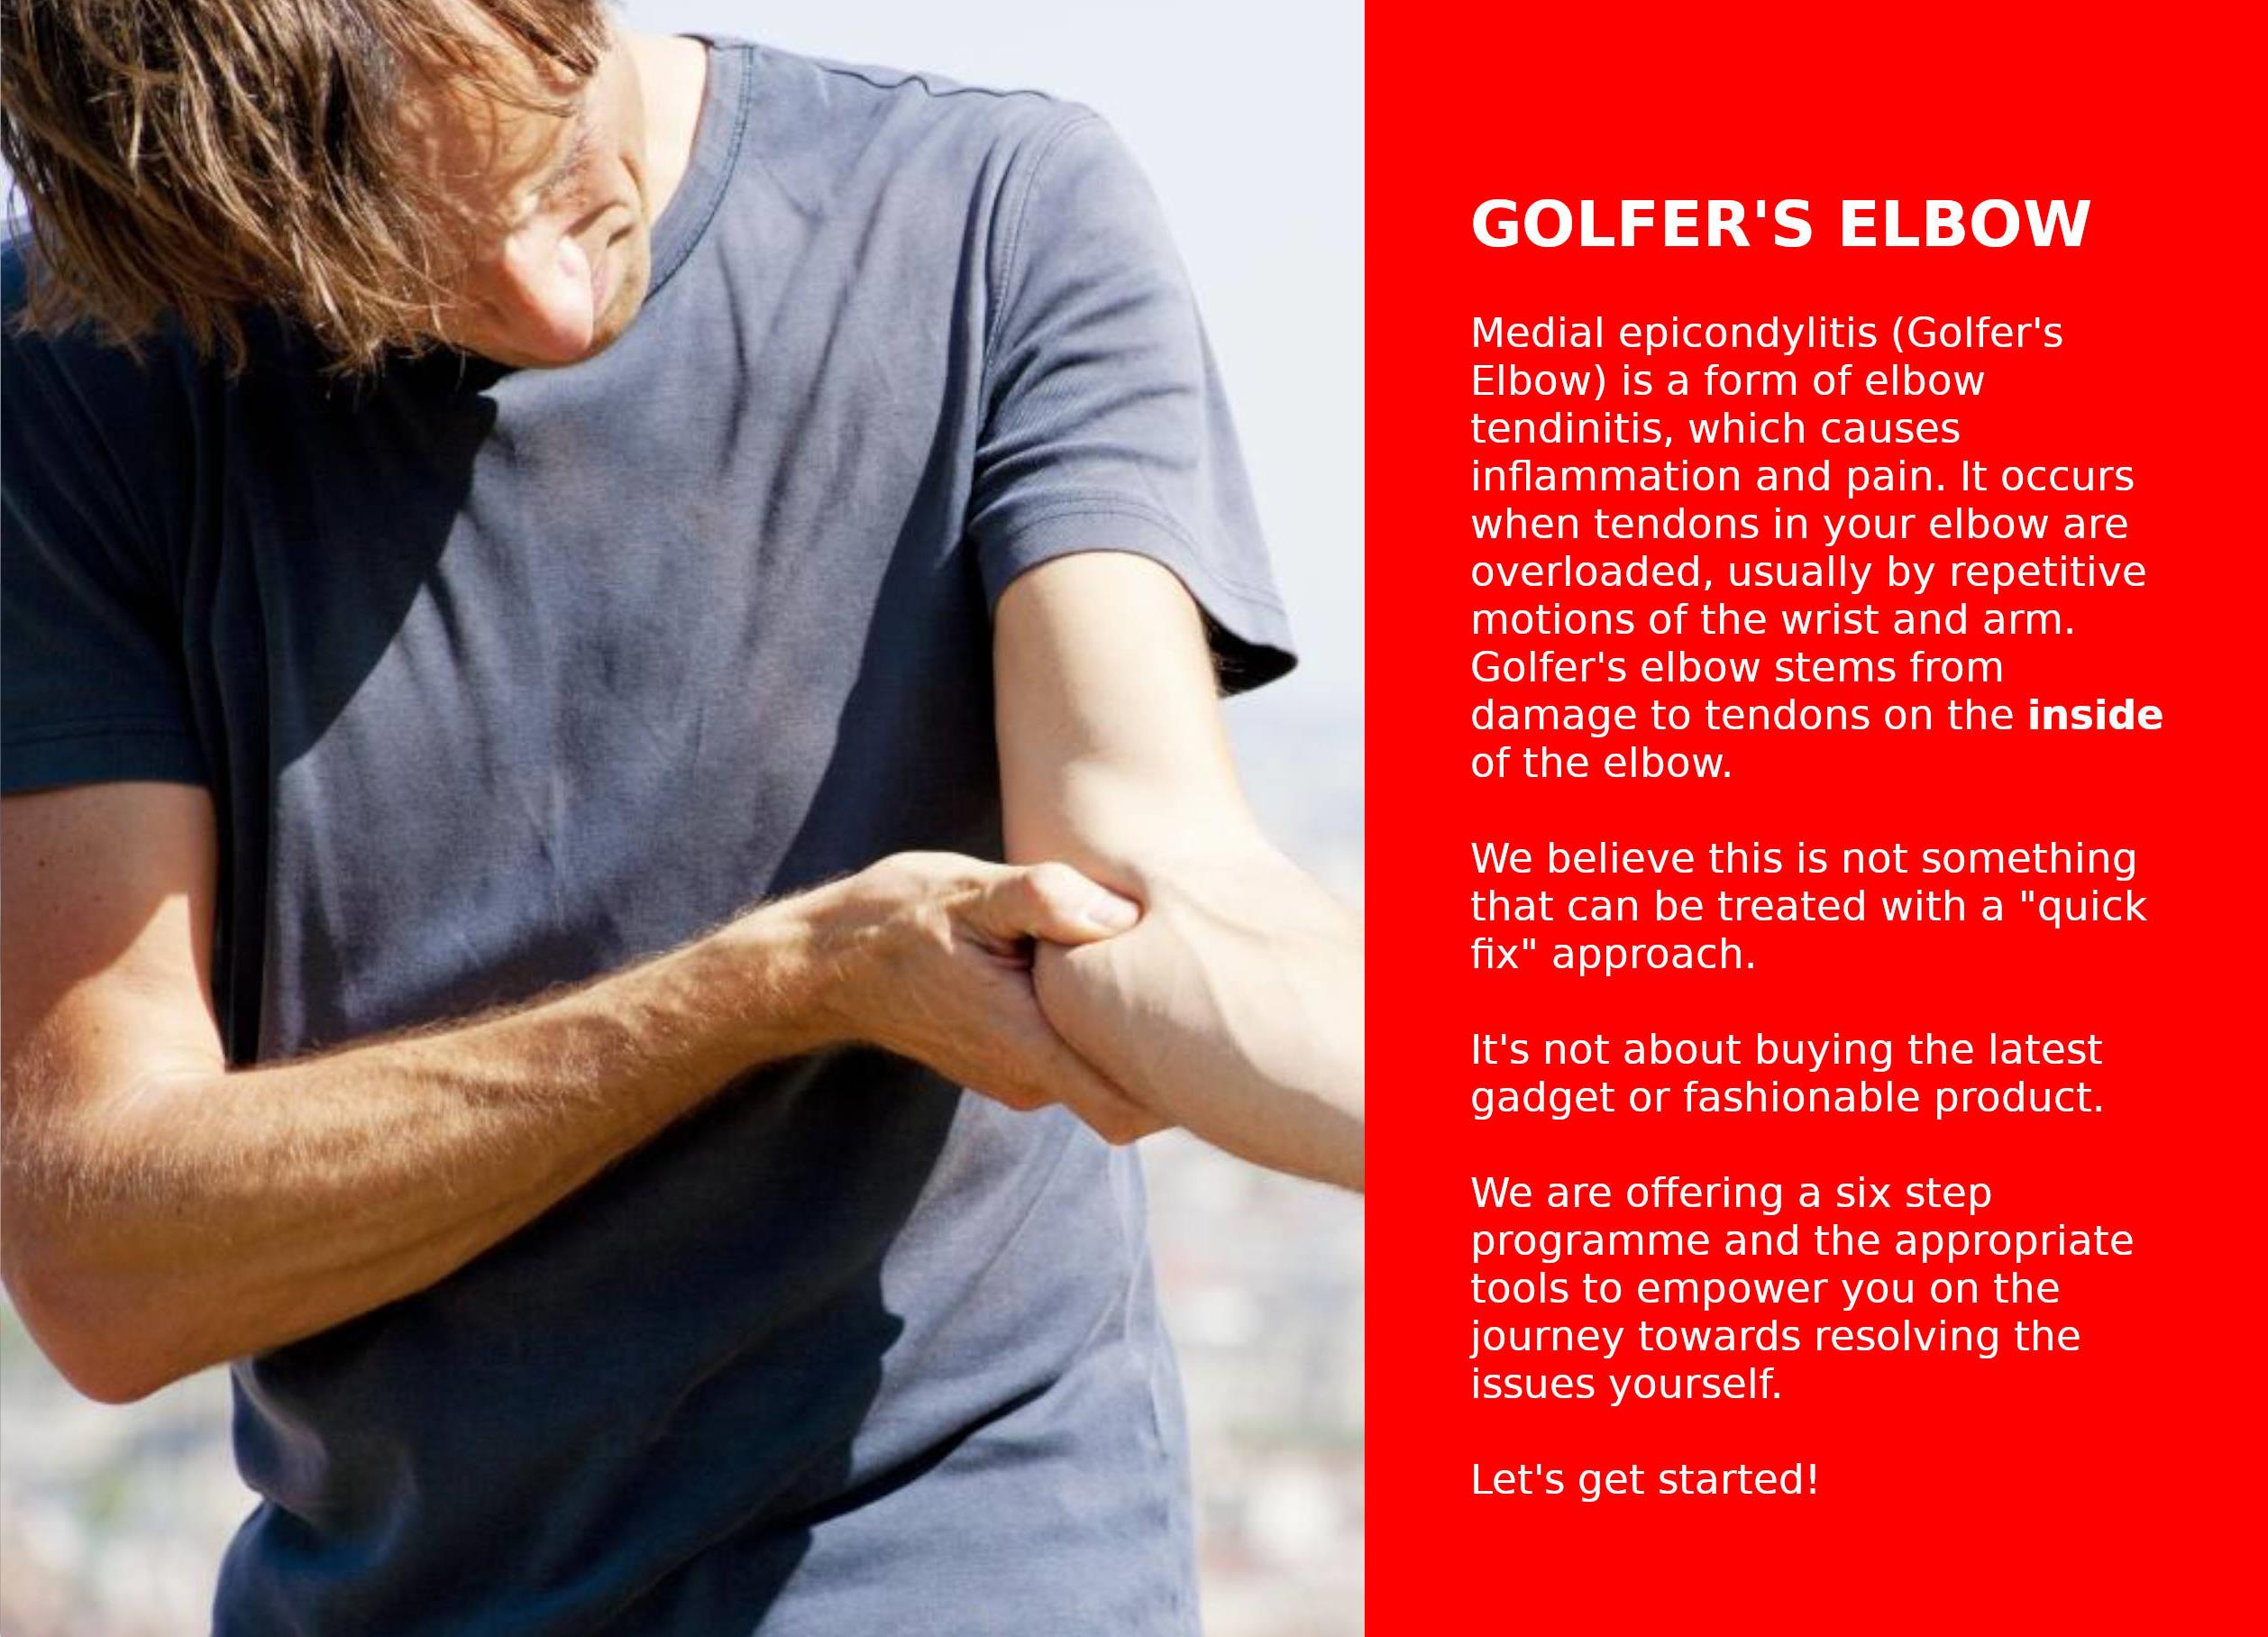 Golfer's Elbow Pain Explained